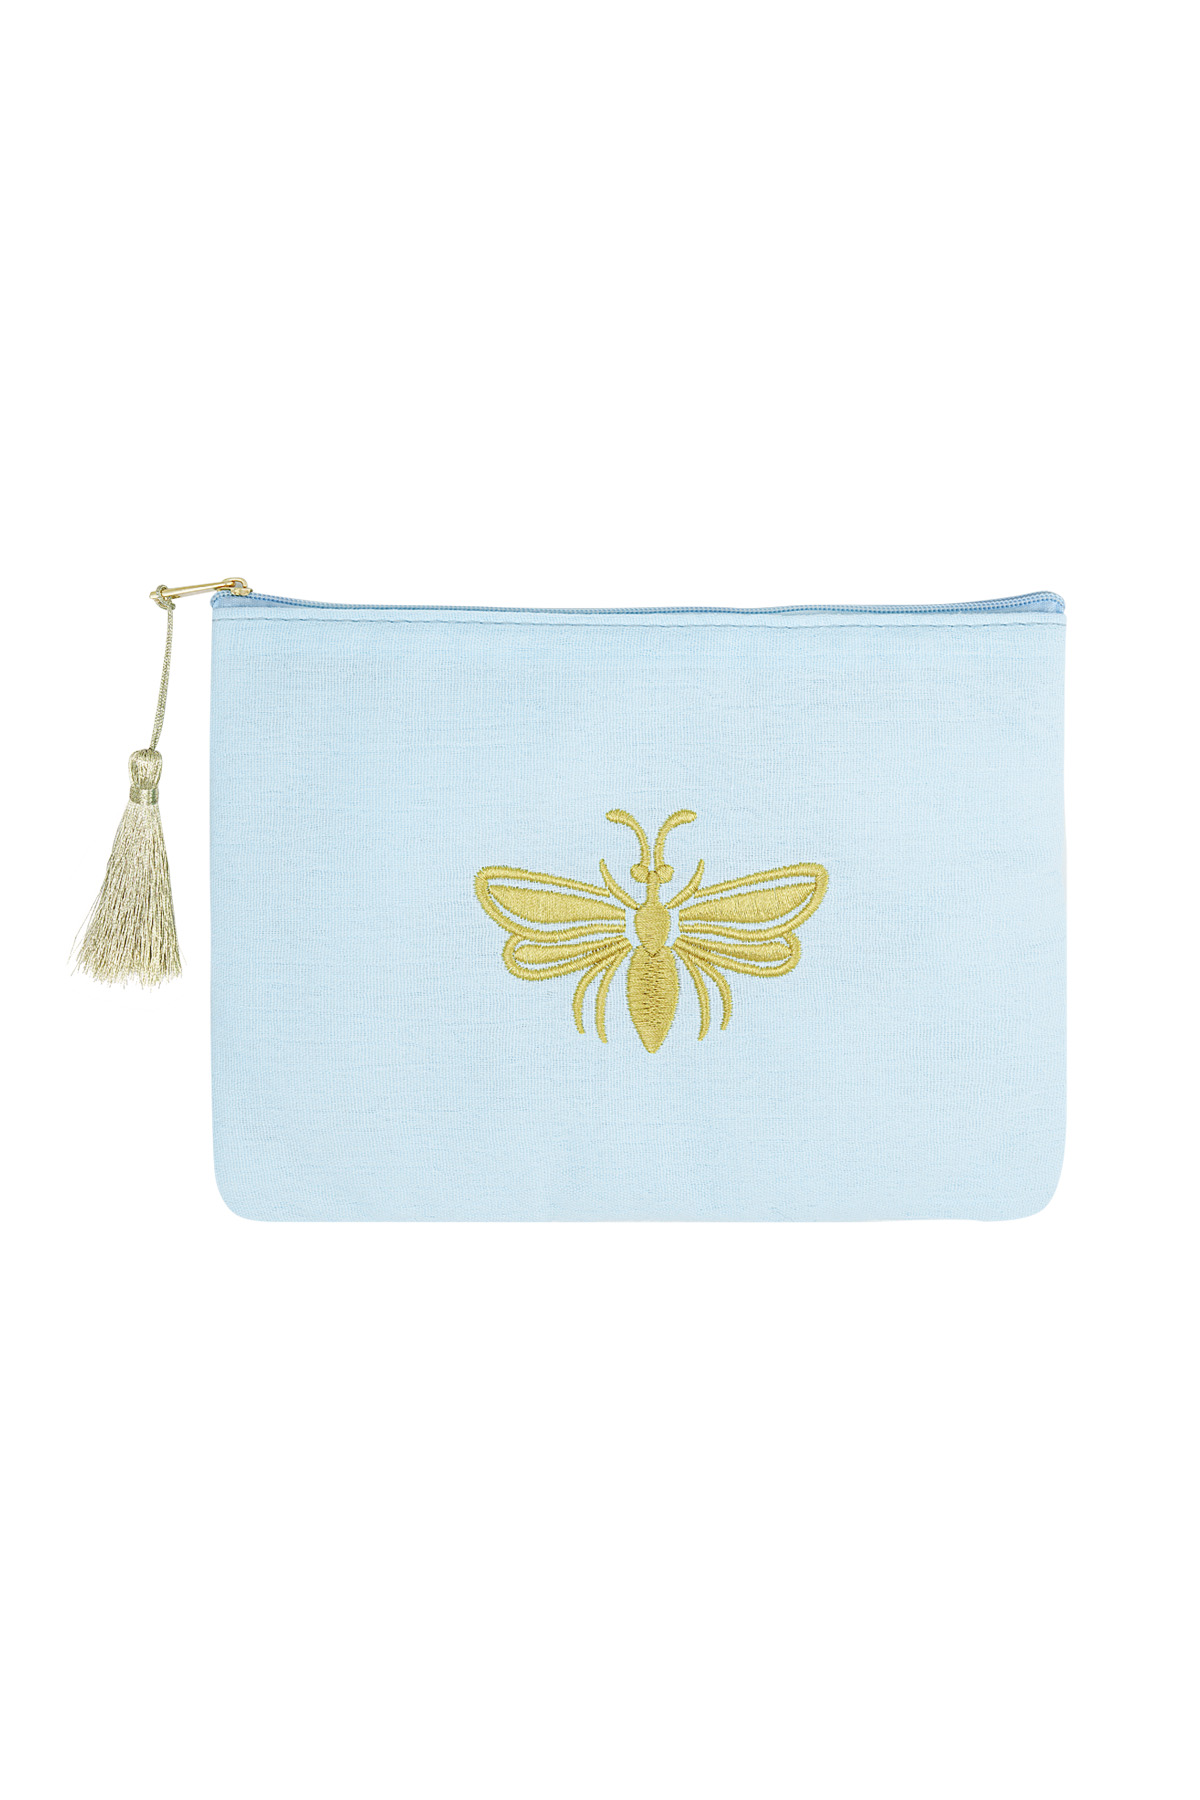 Make-up bag with golden bee - blue